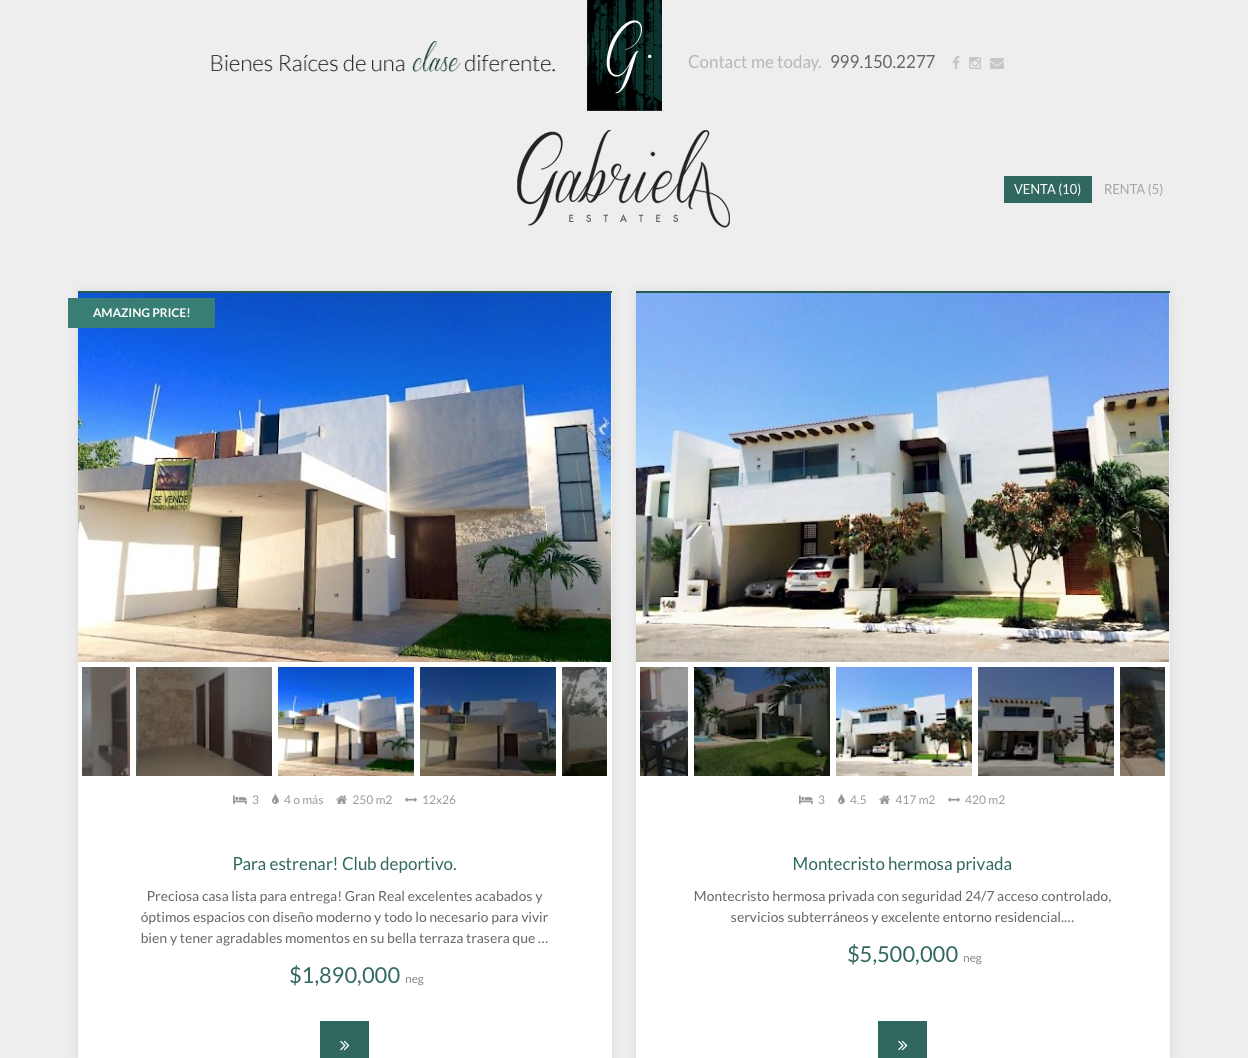 Gabriela Estates